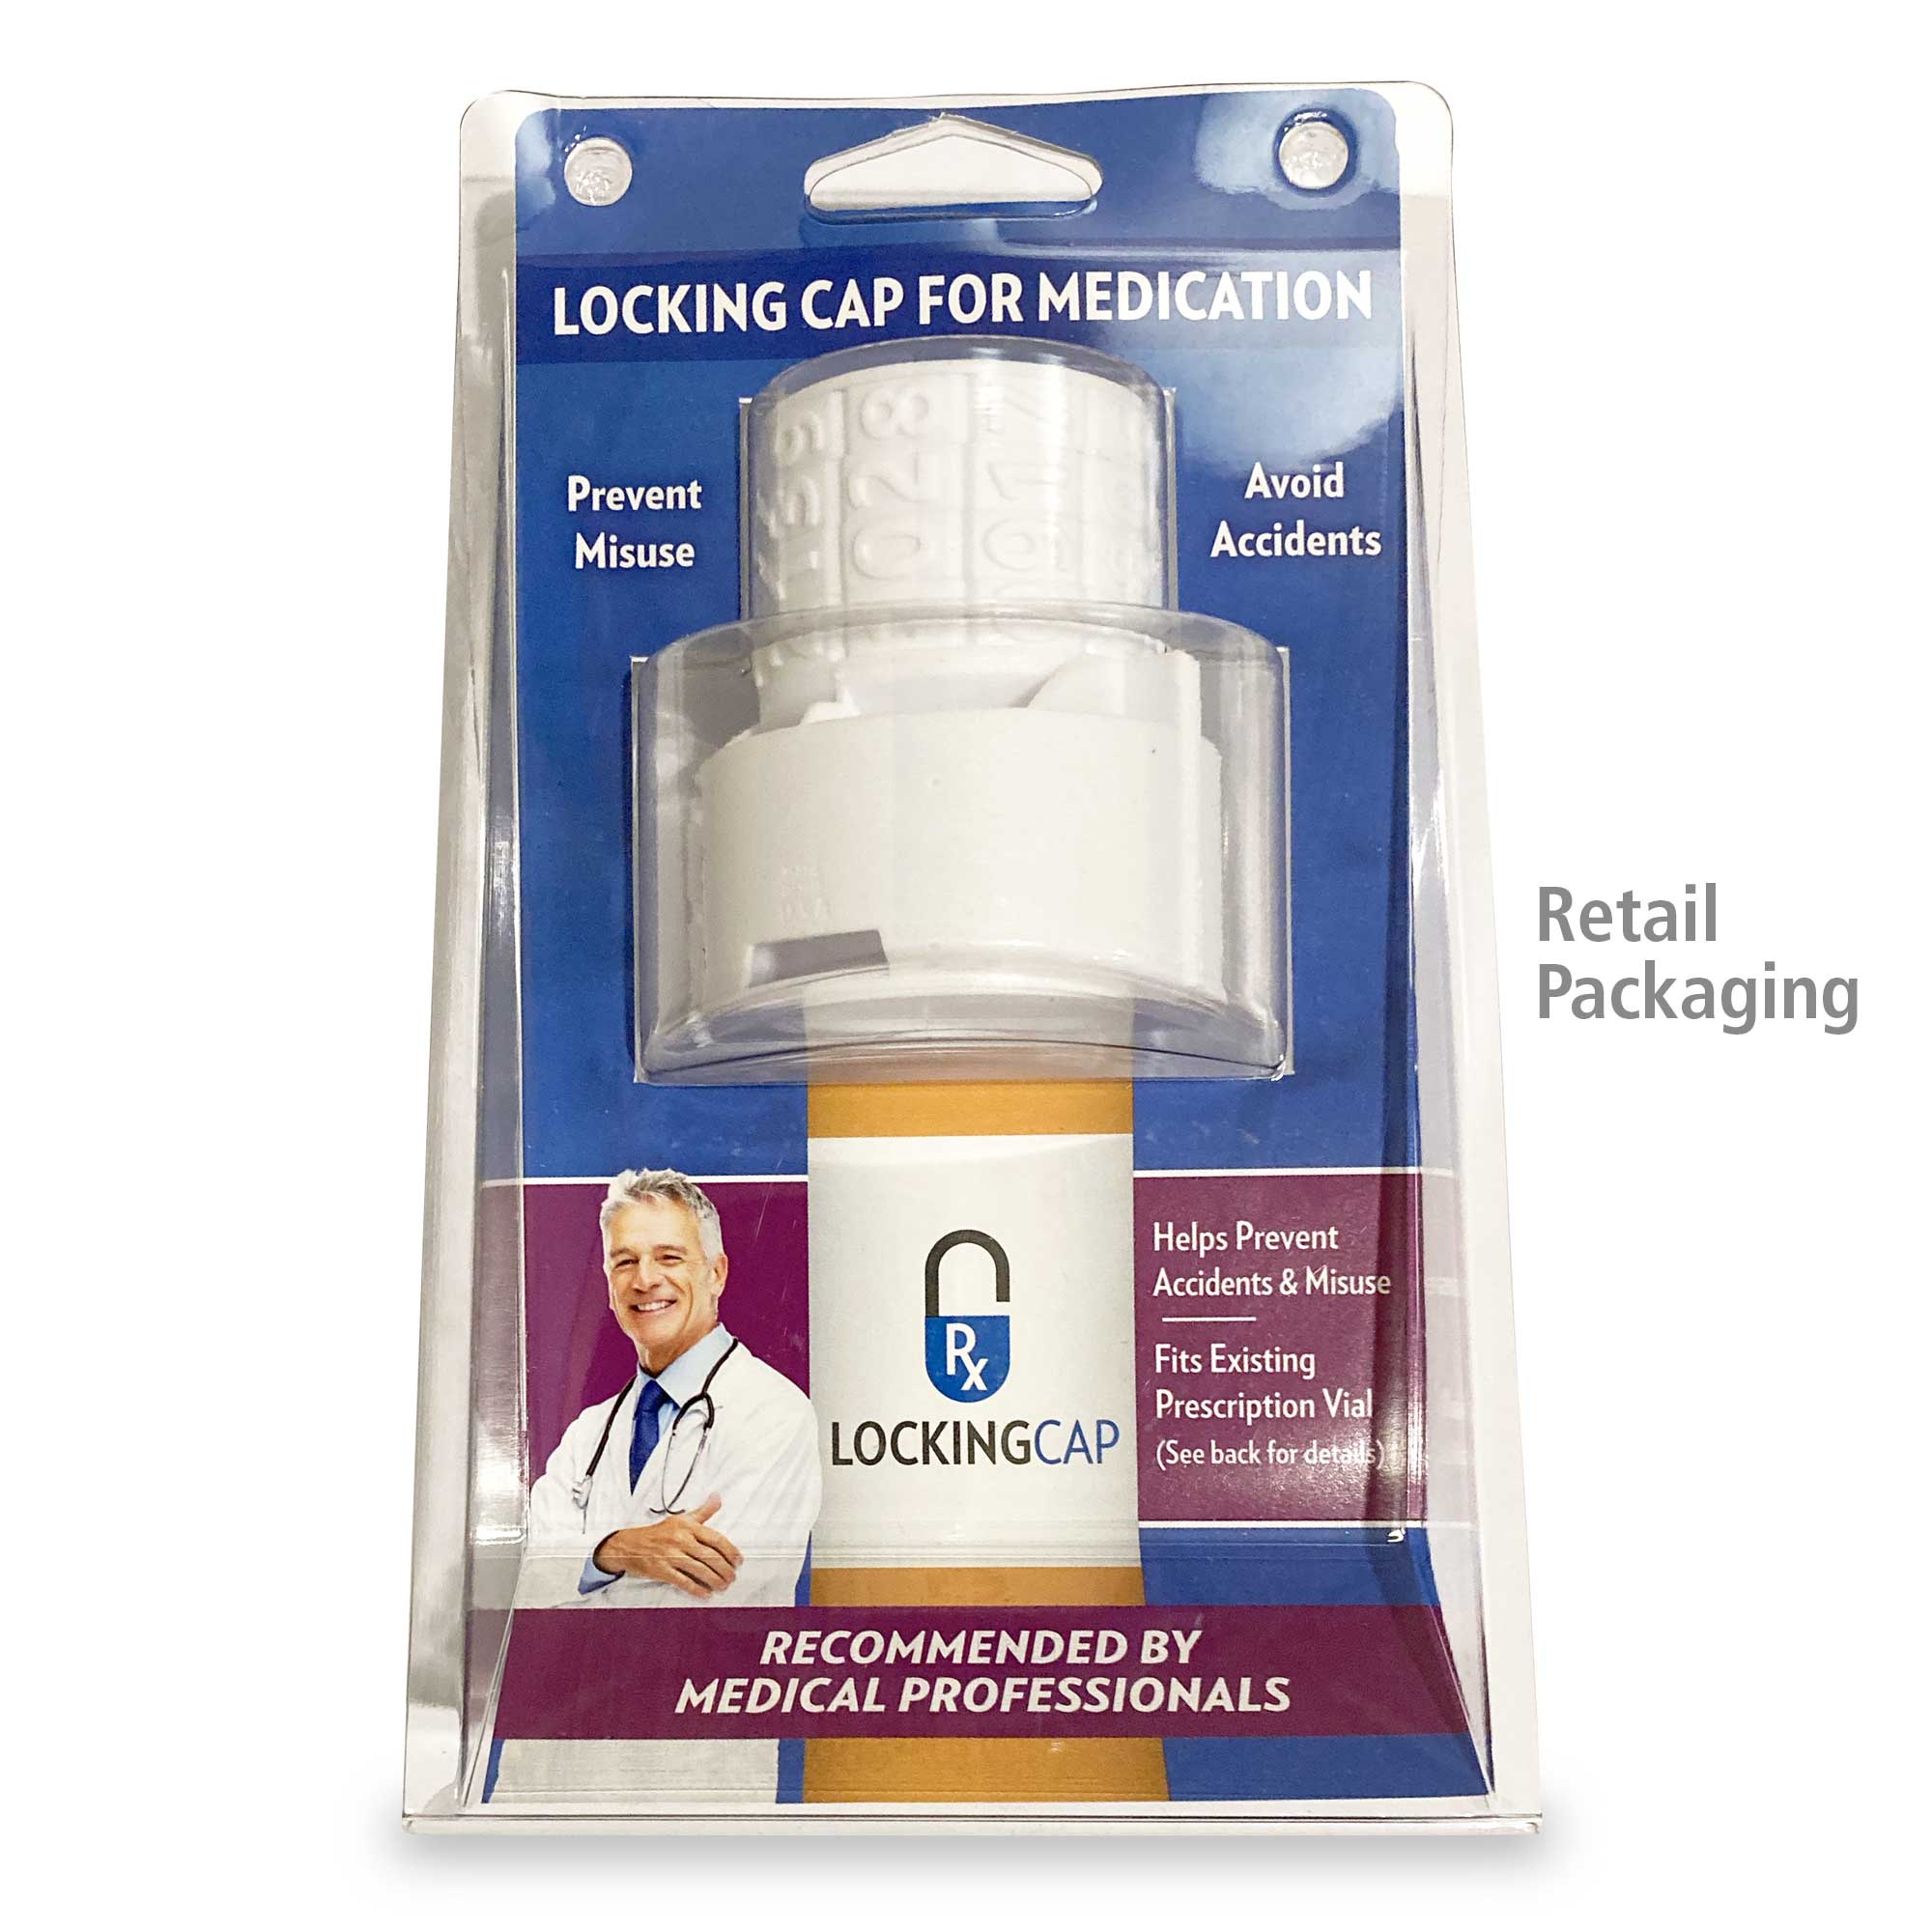 RX Locking Cap for Medication